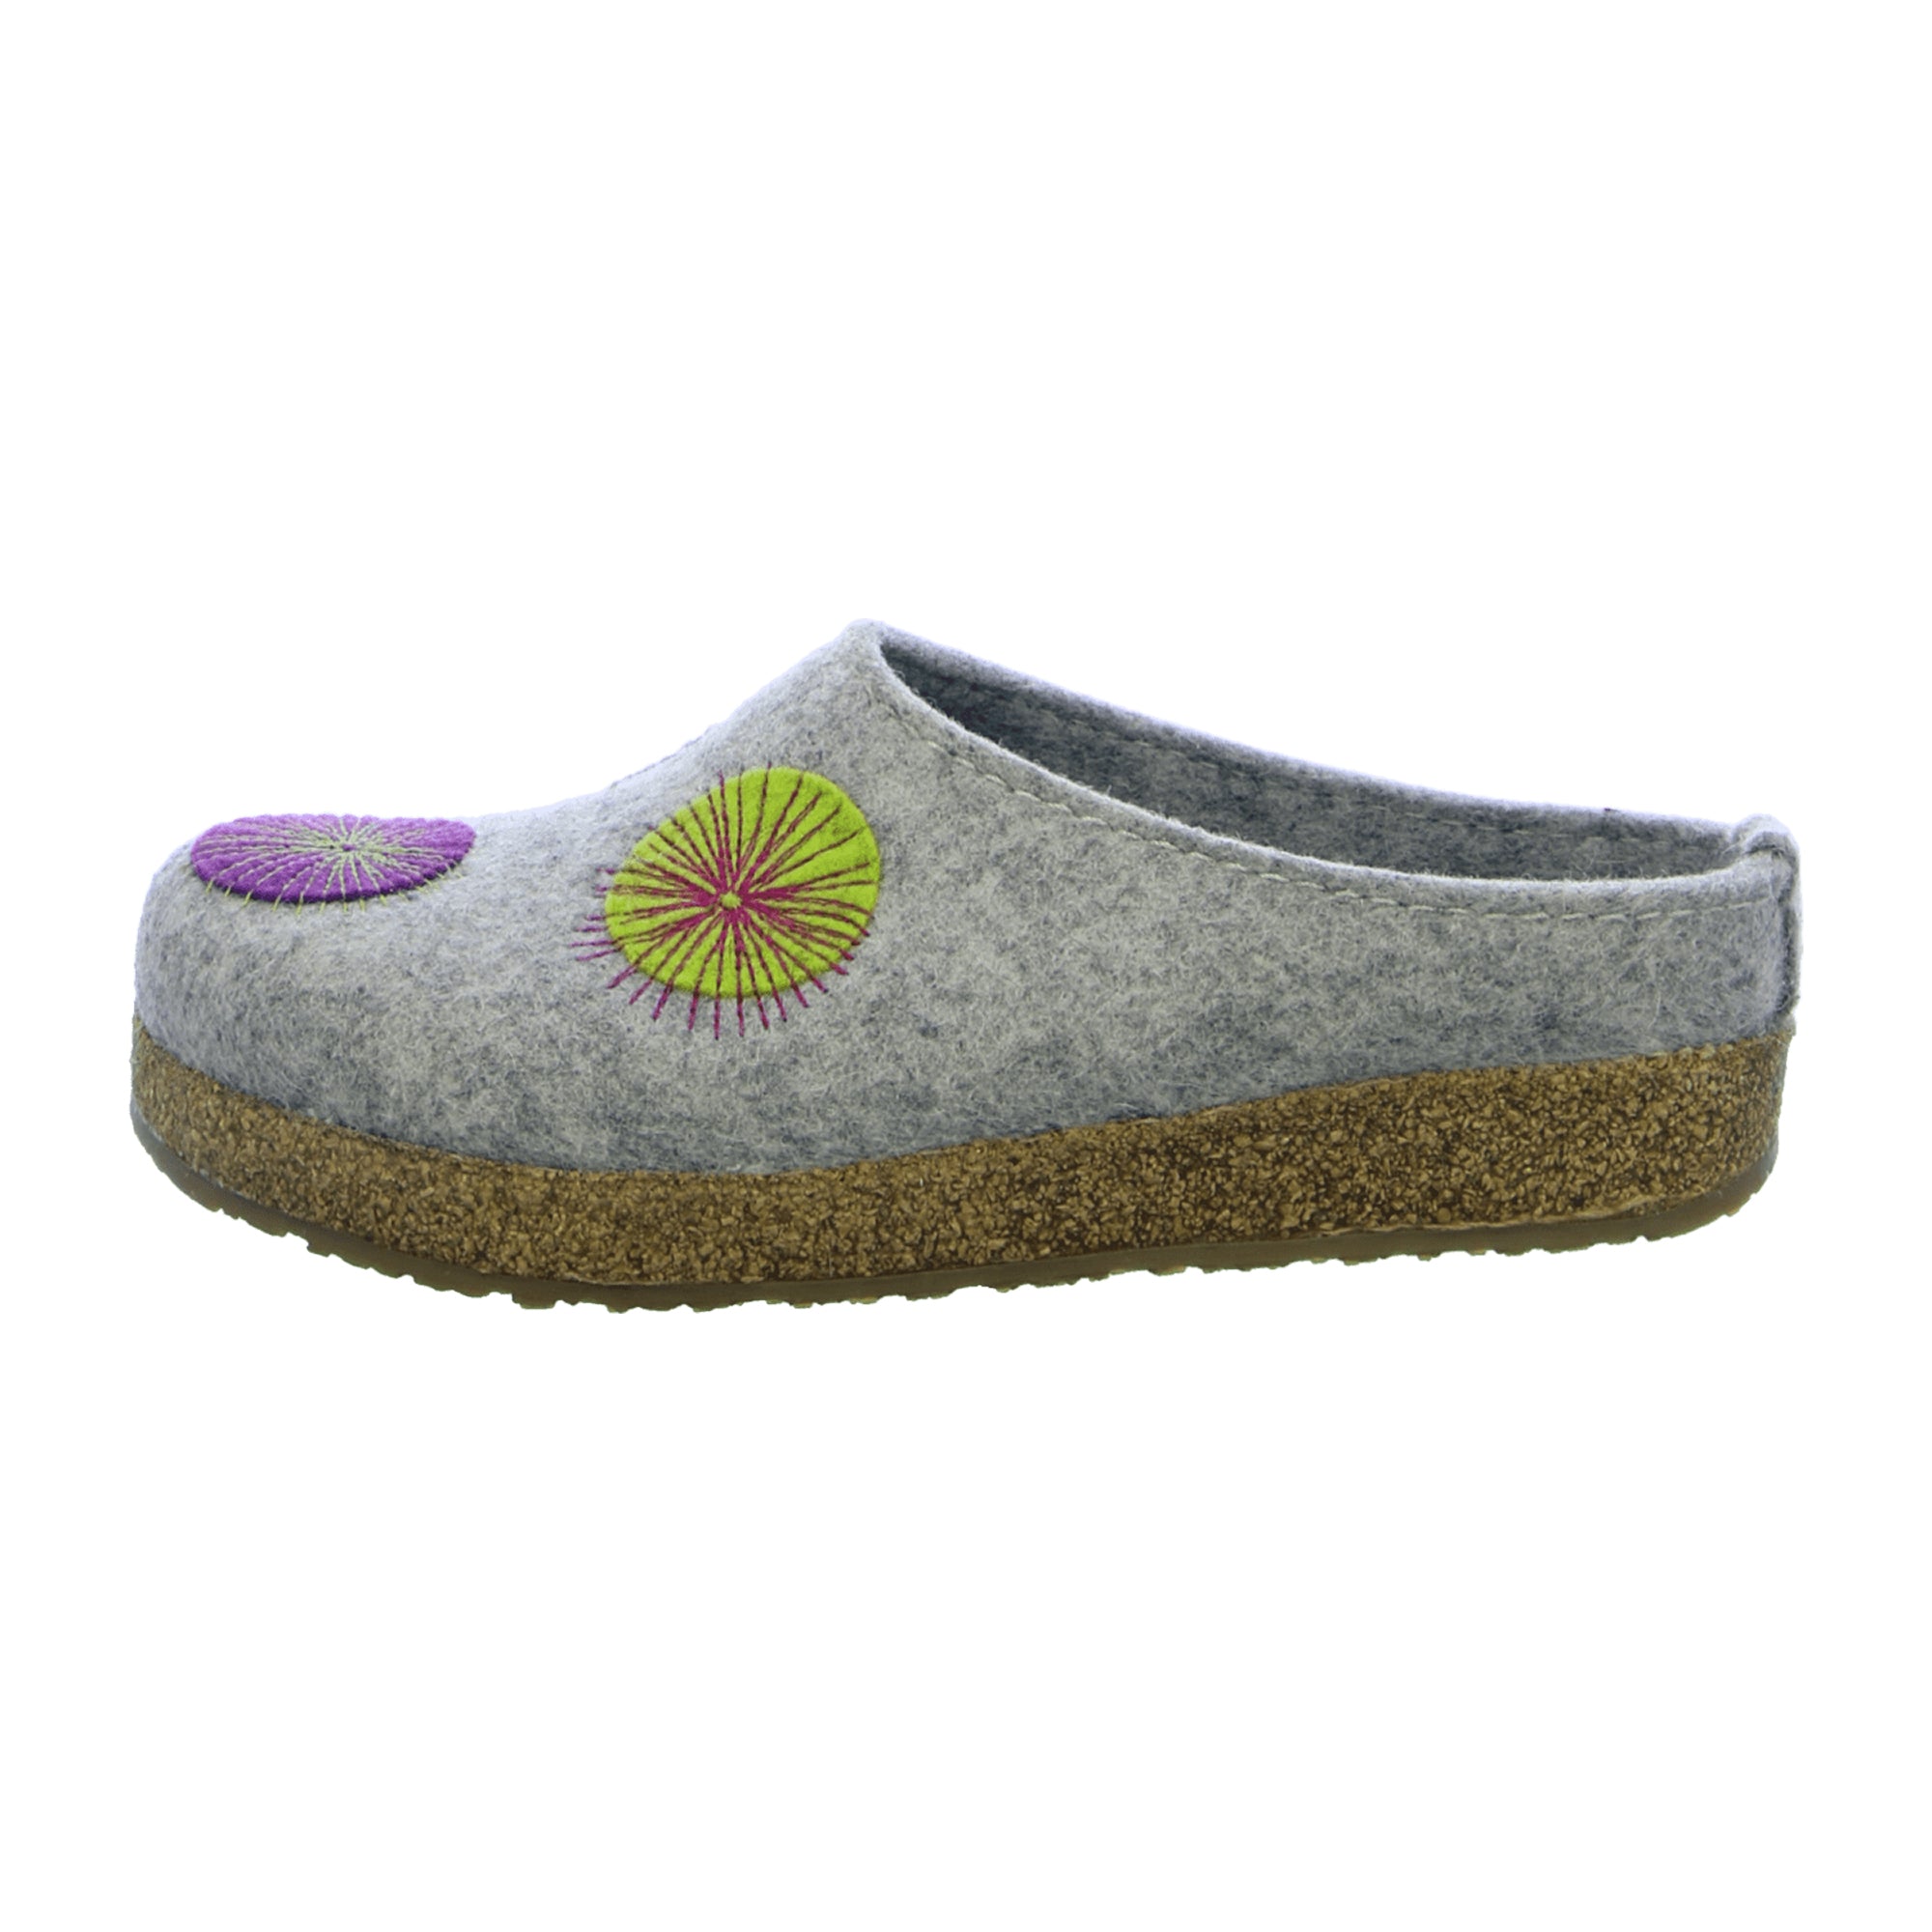 Haflinger Women's Slippers in Grey - Comfortable and Stylish Indoor Footwear